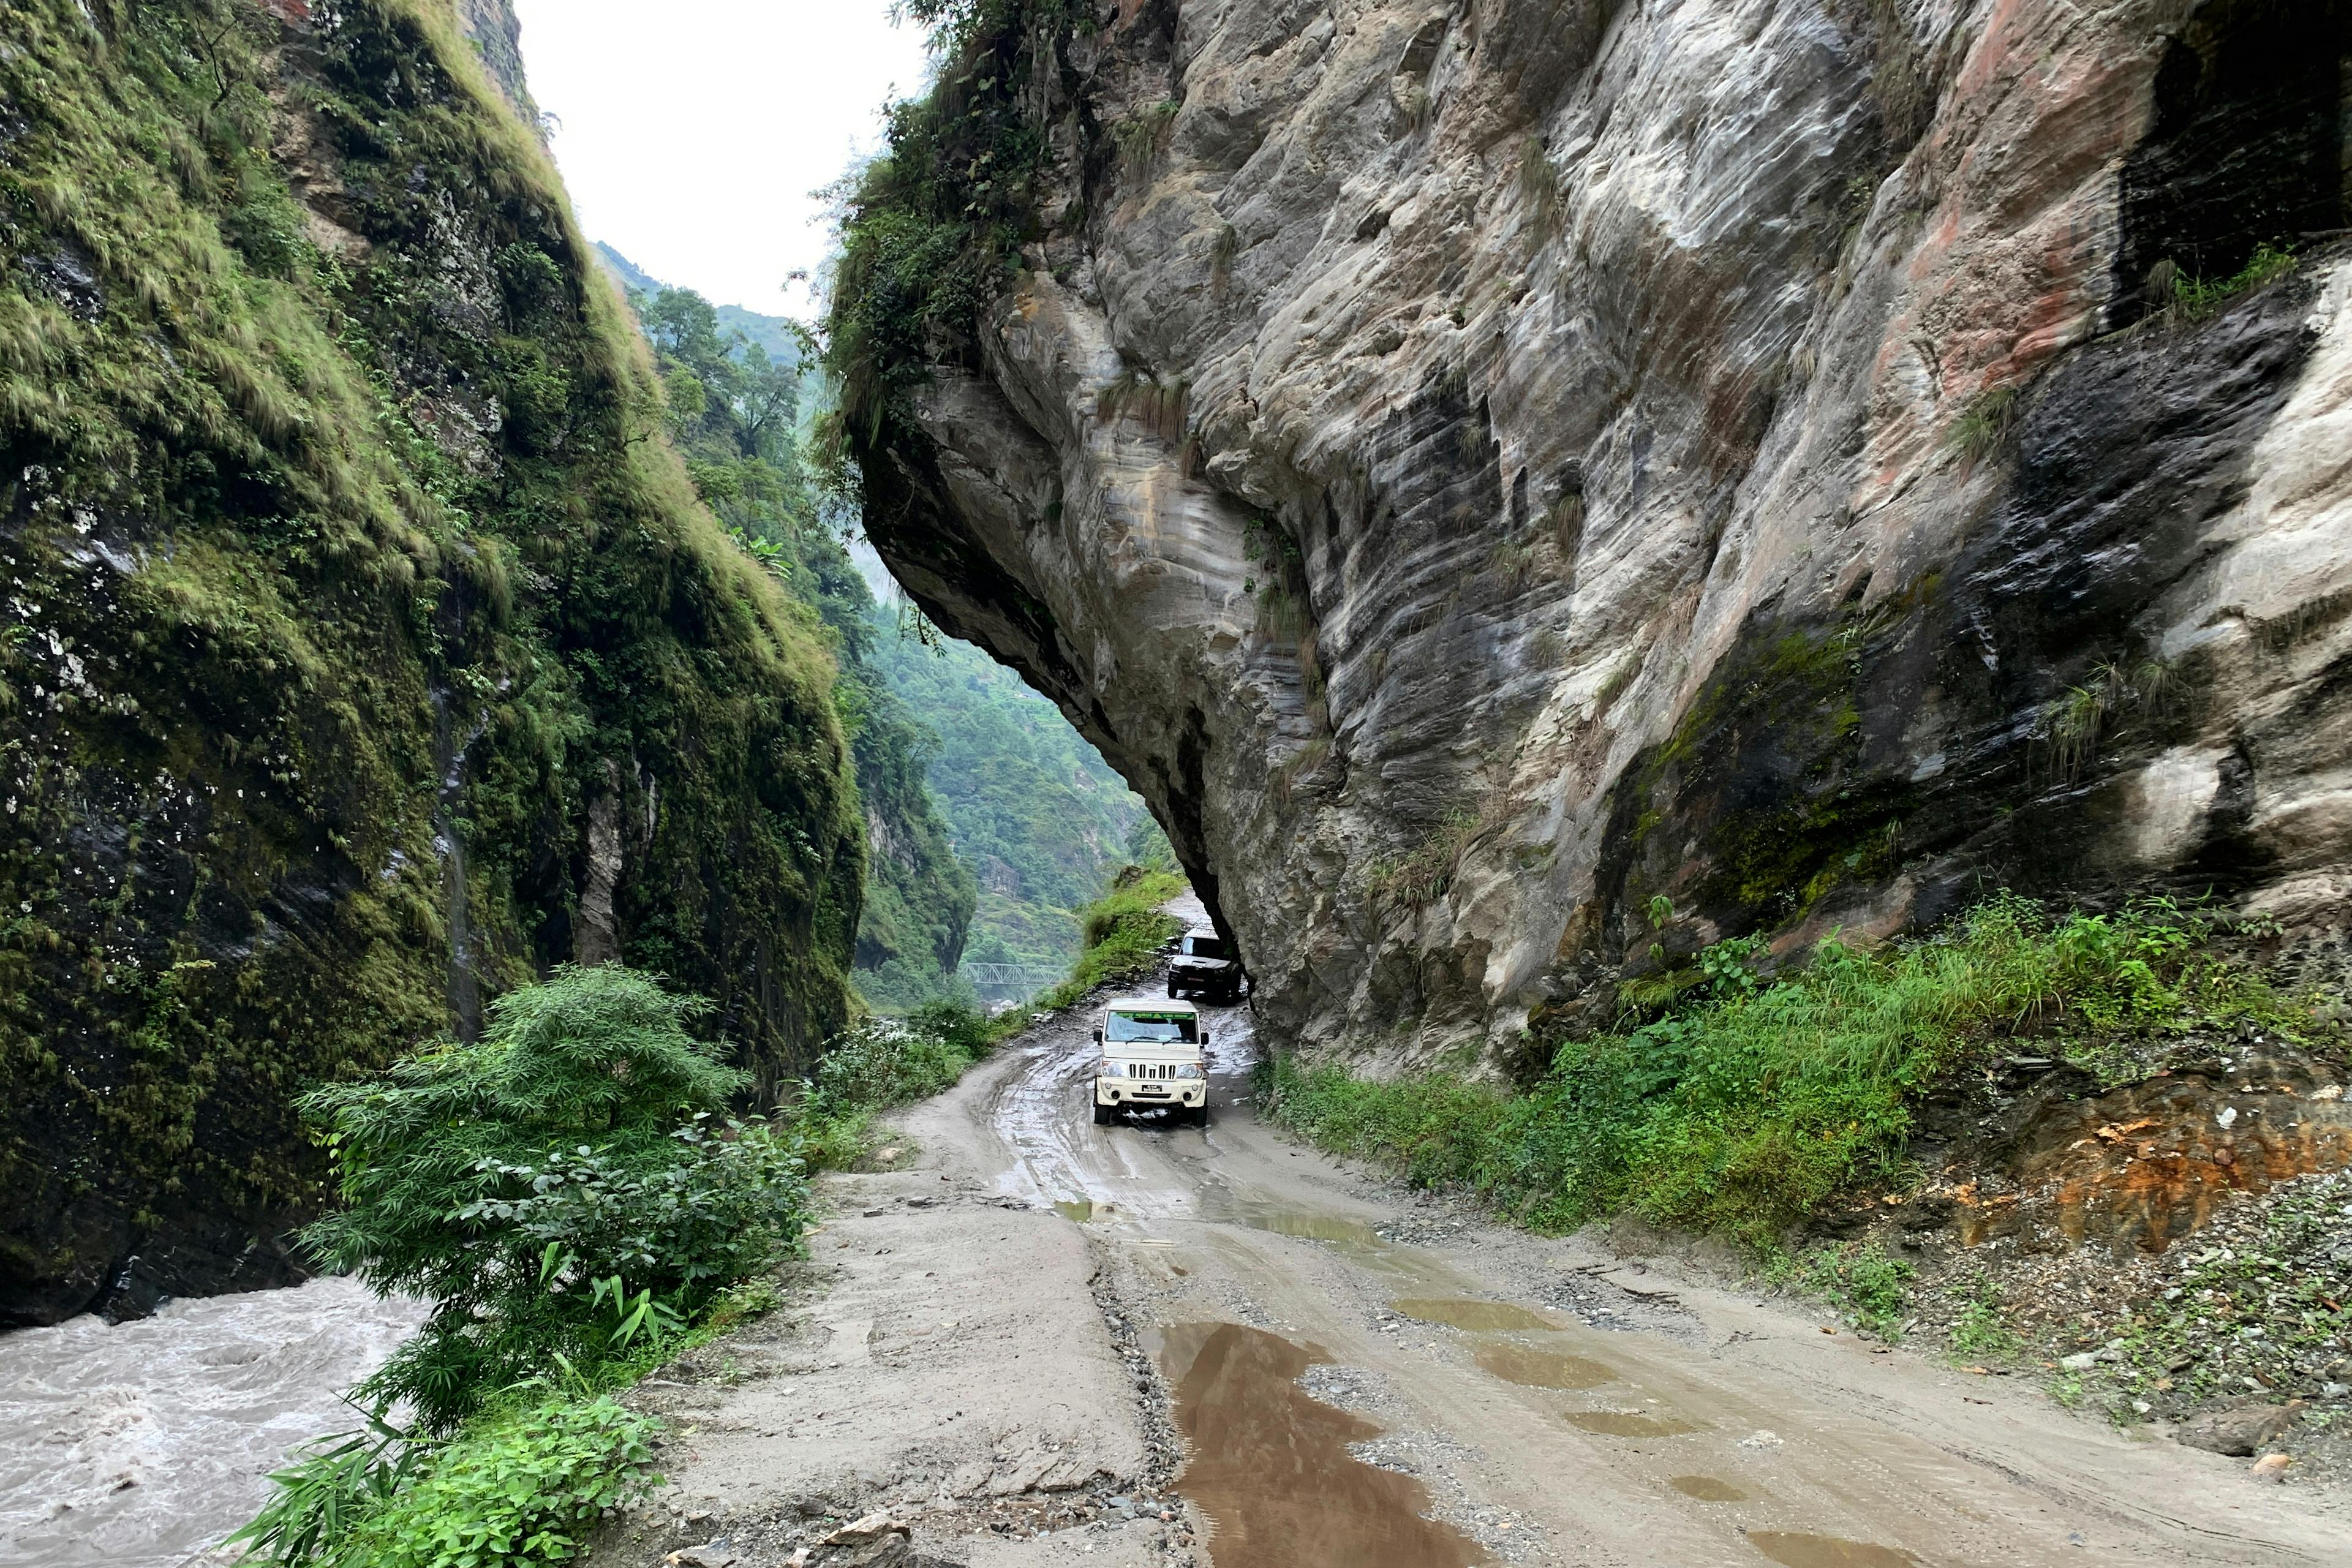 Kathmandu Beni Jomsom Muktinath Highway: A wild ride in Nepal Himalaya